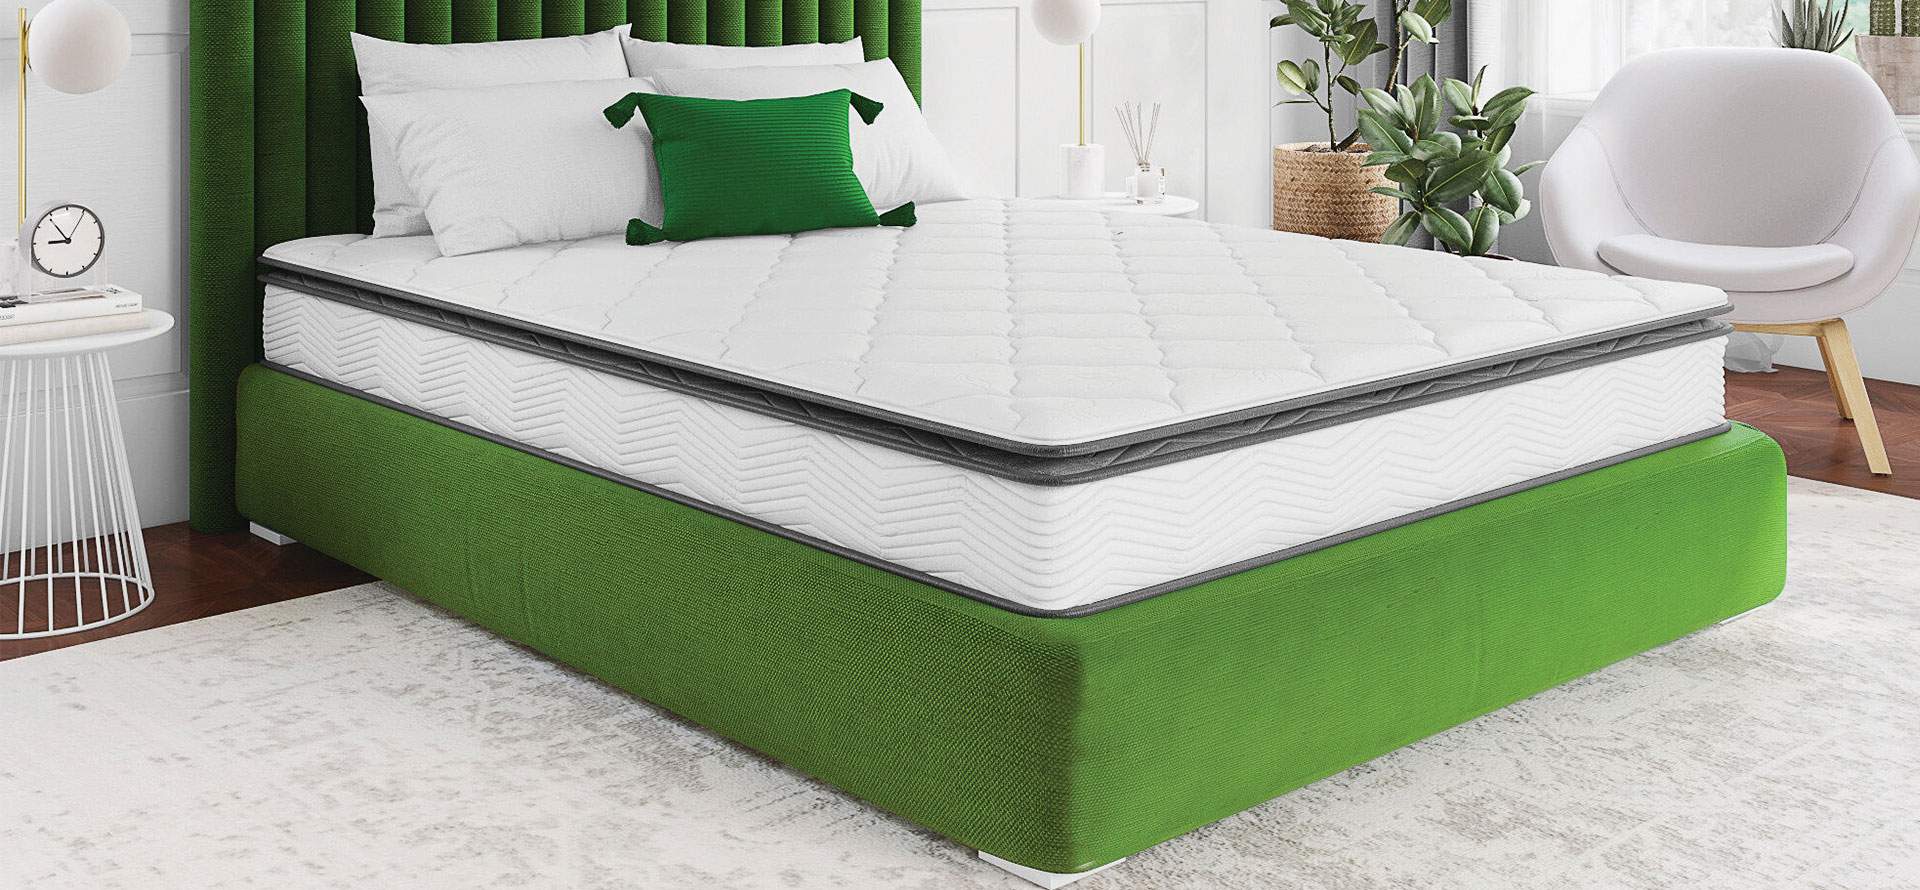 Pillow-Top mattress on the green box-spring.